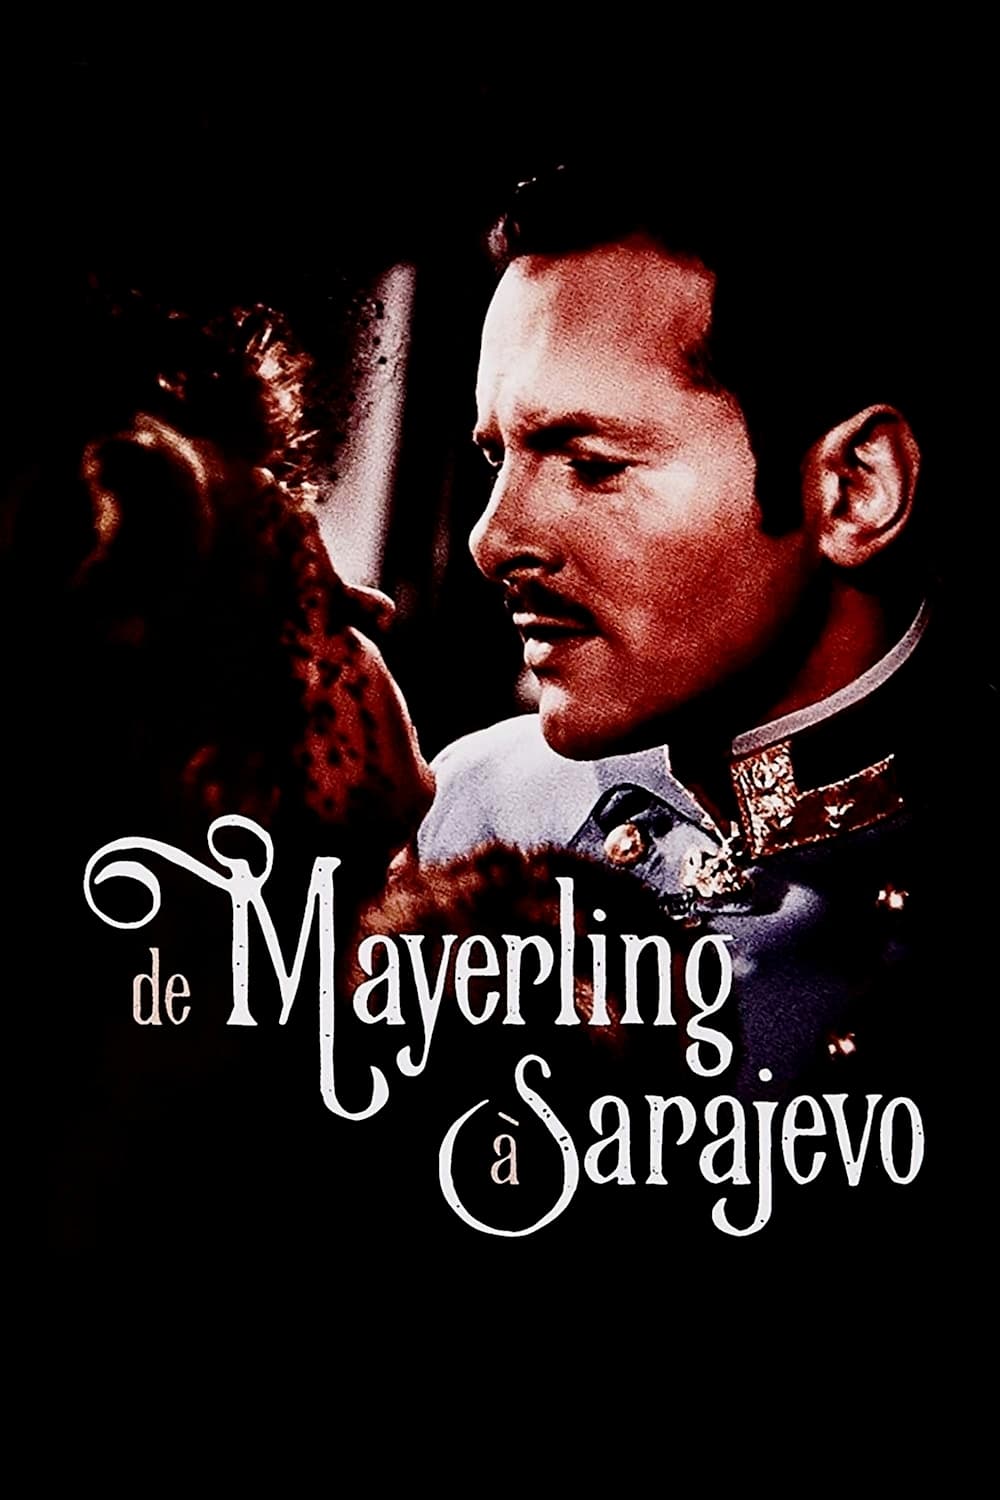 From Mayerling to Sarajevo (1940)